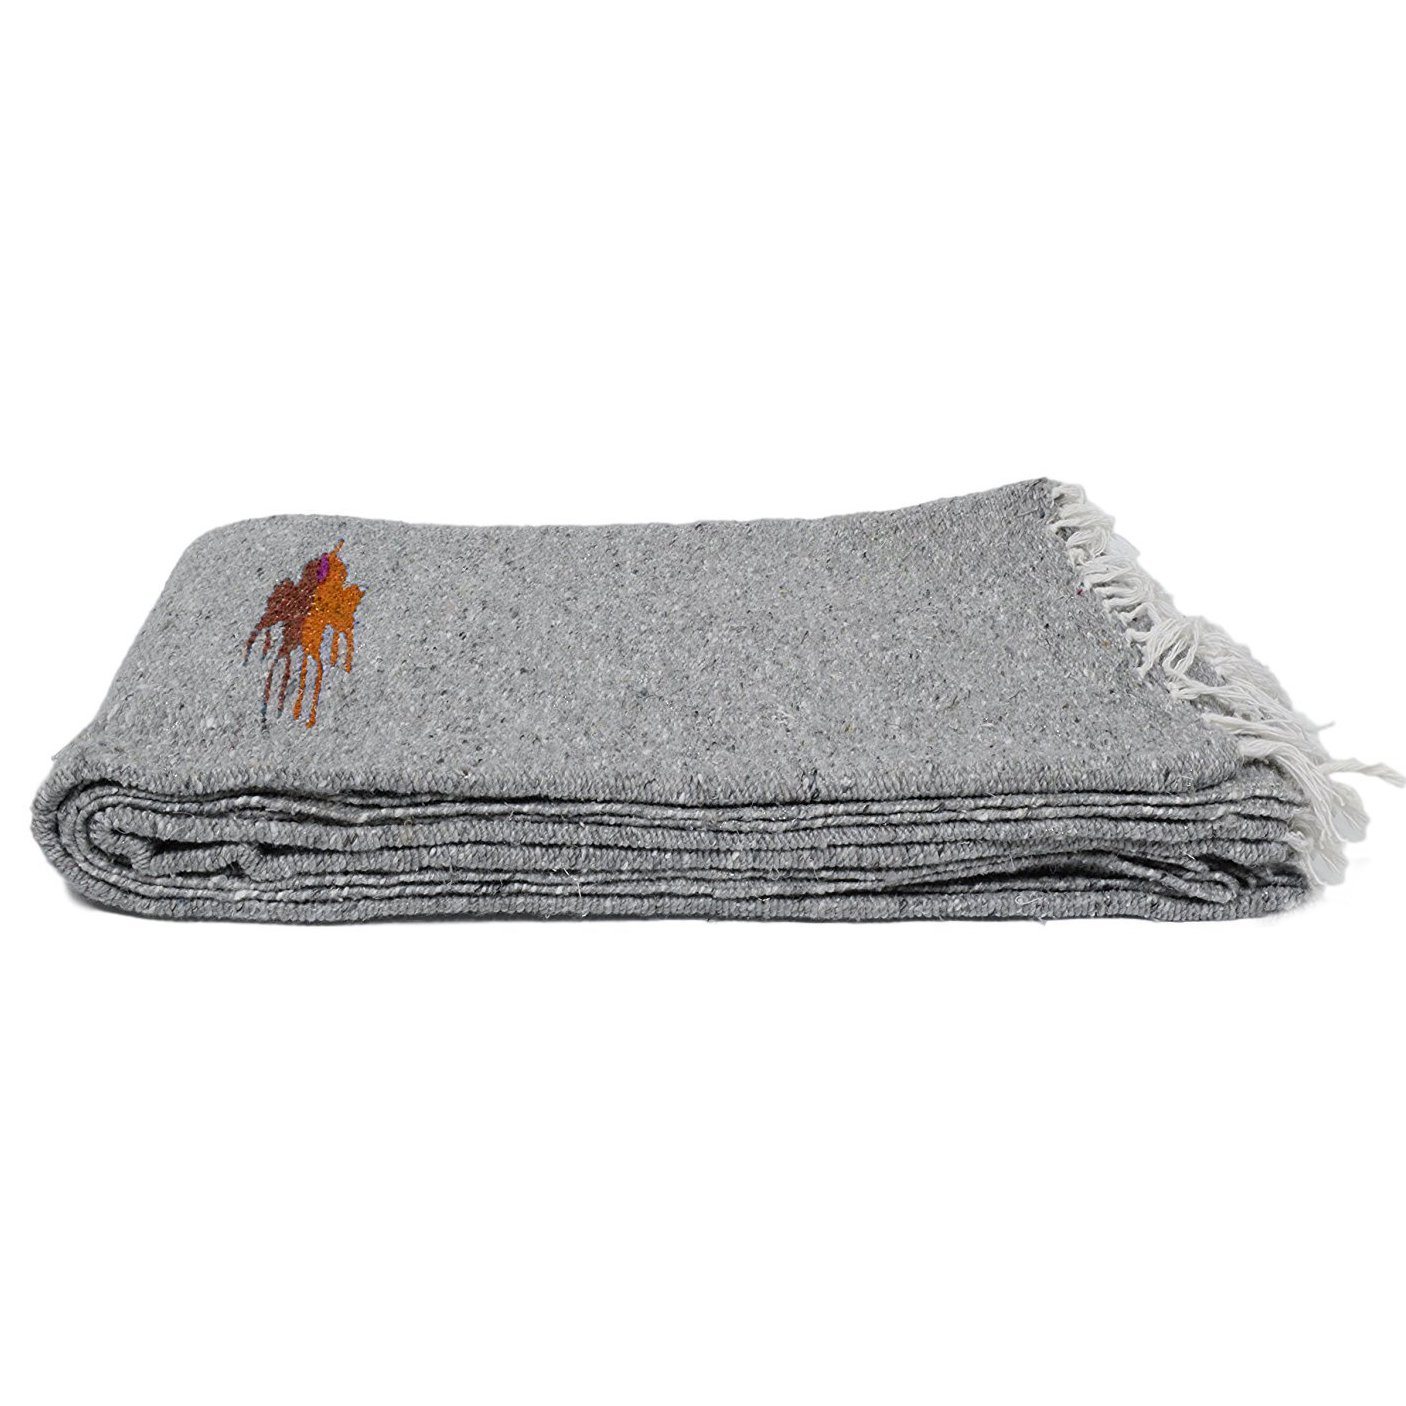 Blanket | Phoenix - Mexican Thunderbird Blanket | Loomshine